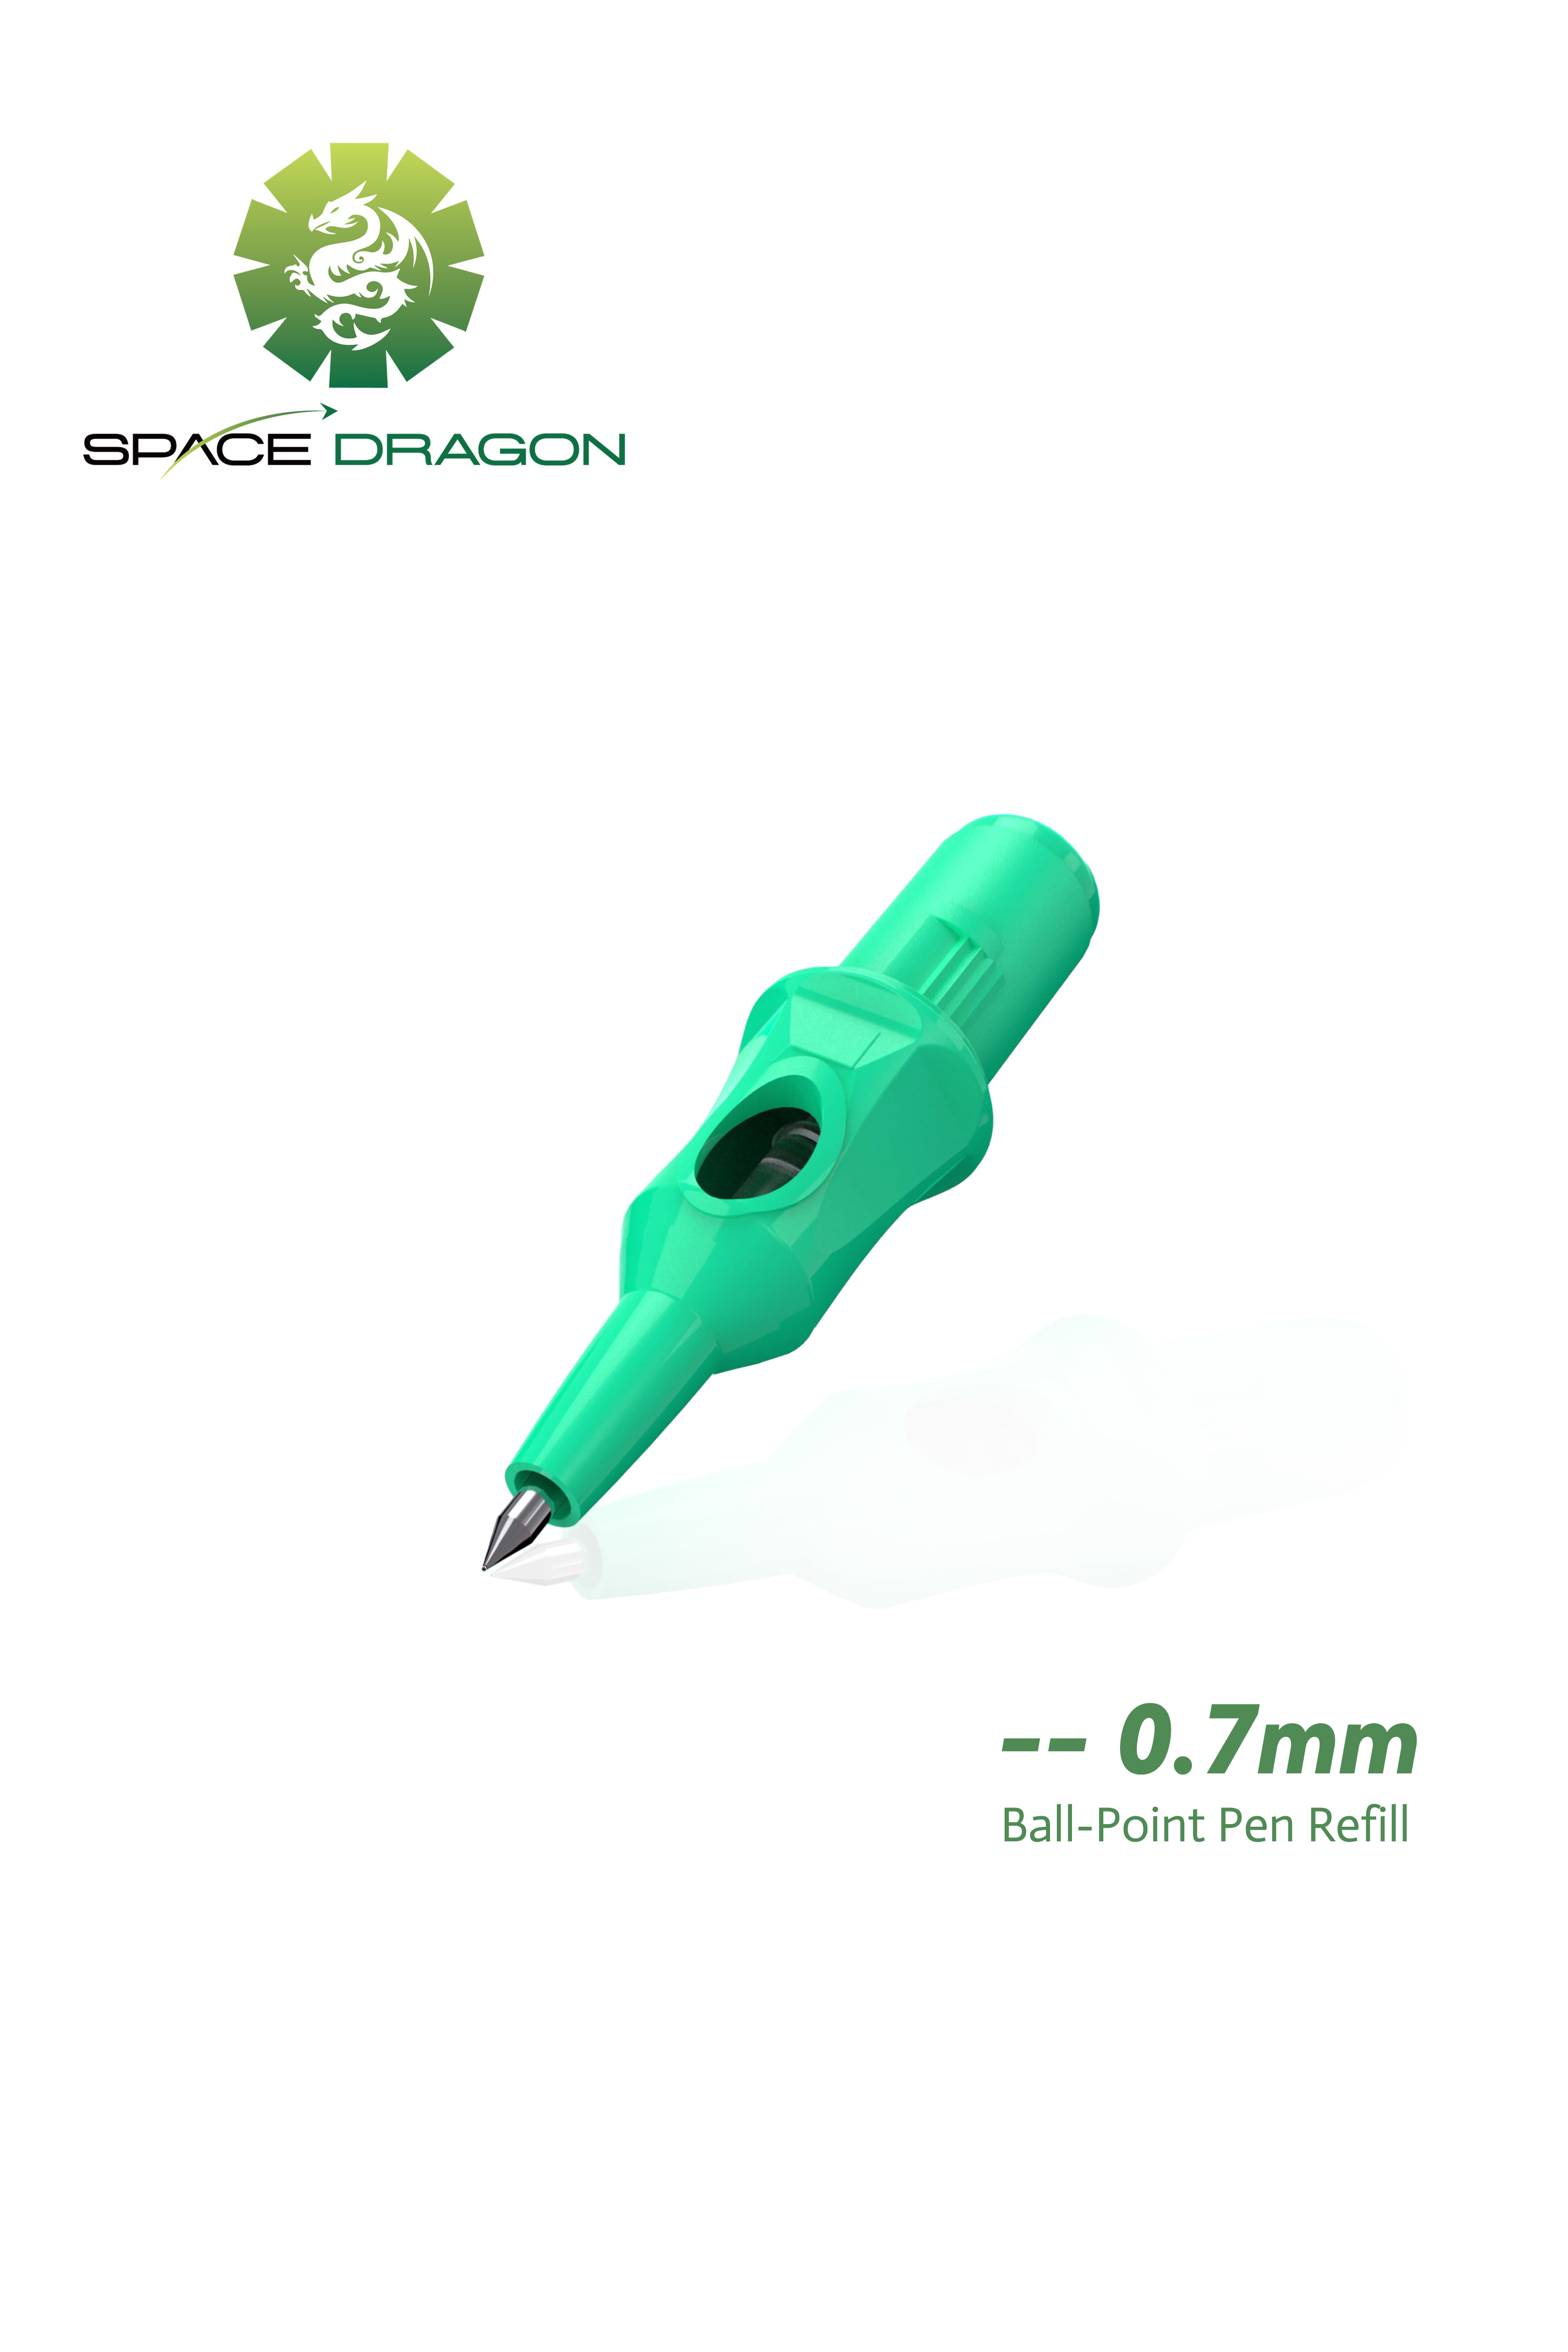 Spacedragon Ballpoint pen tattoo cartridge